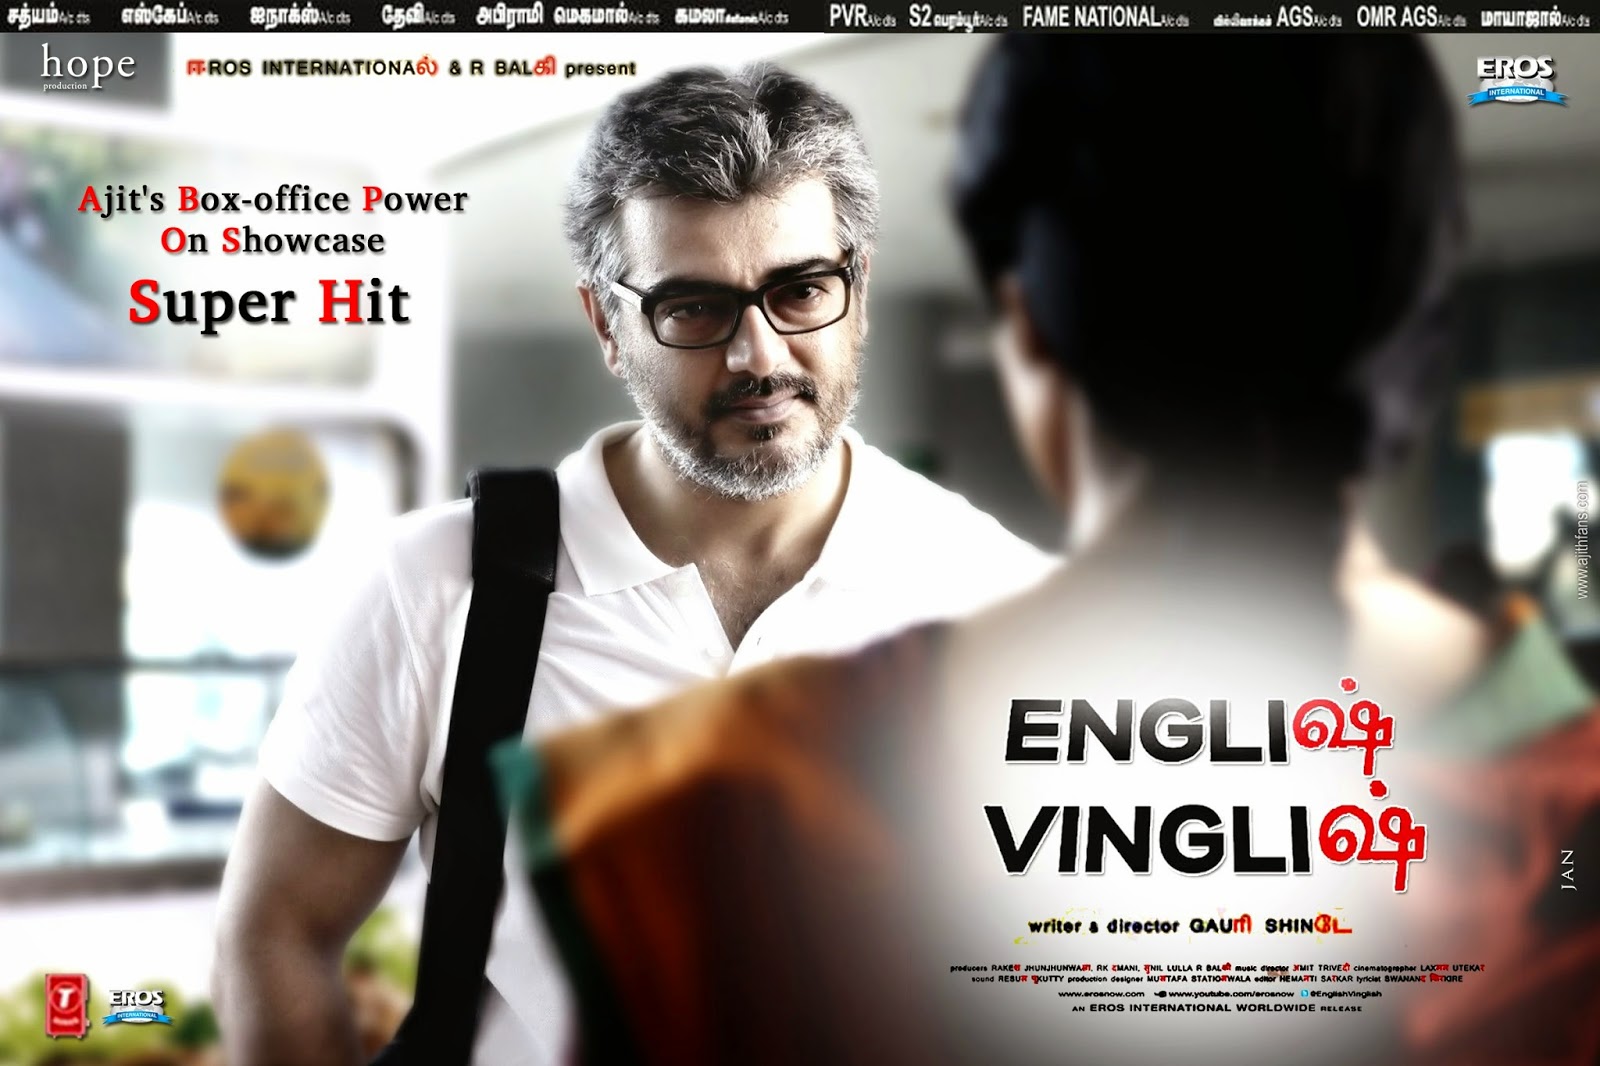 english vinglish download torrent tamil